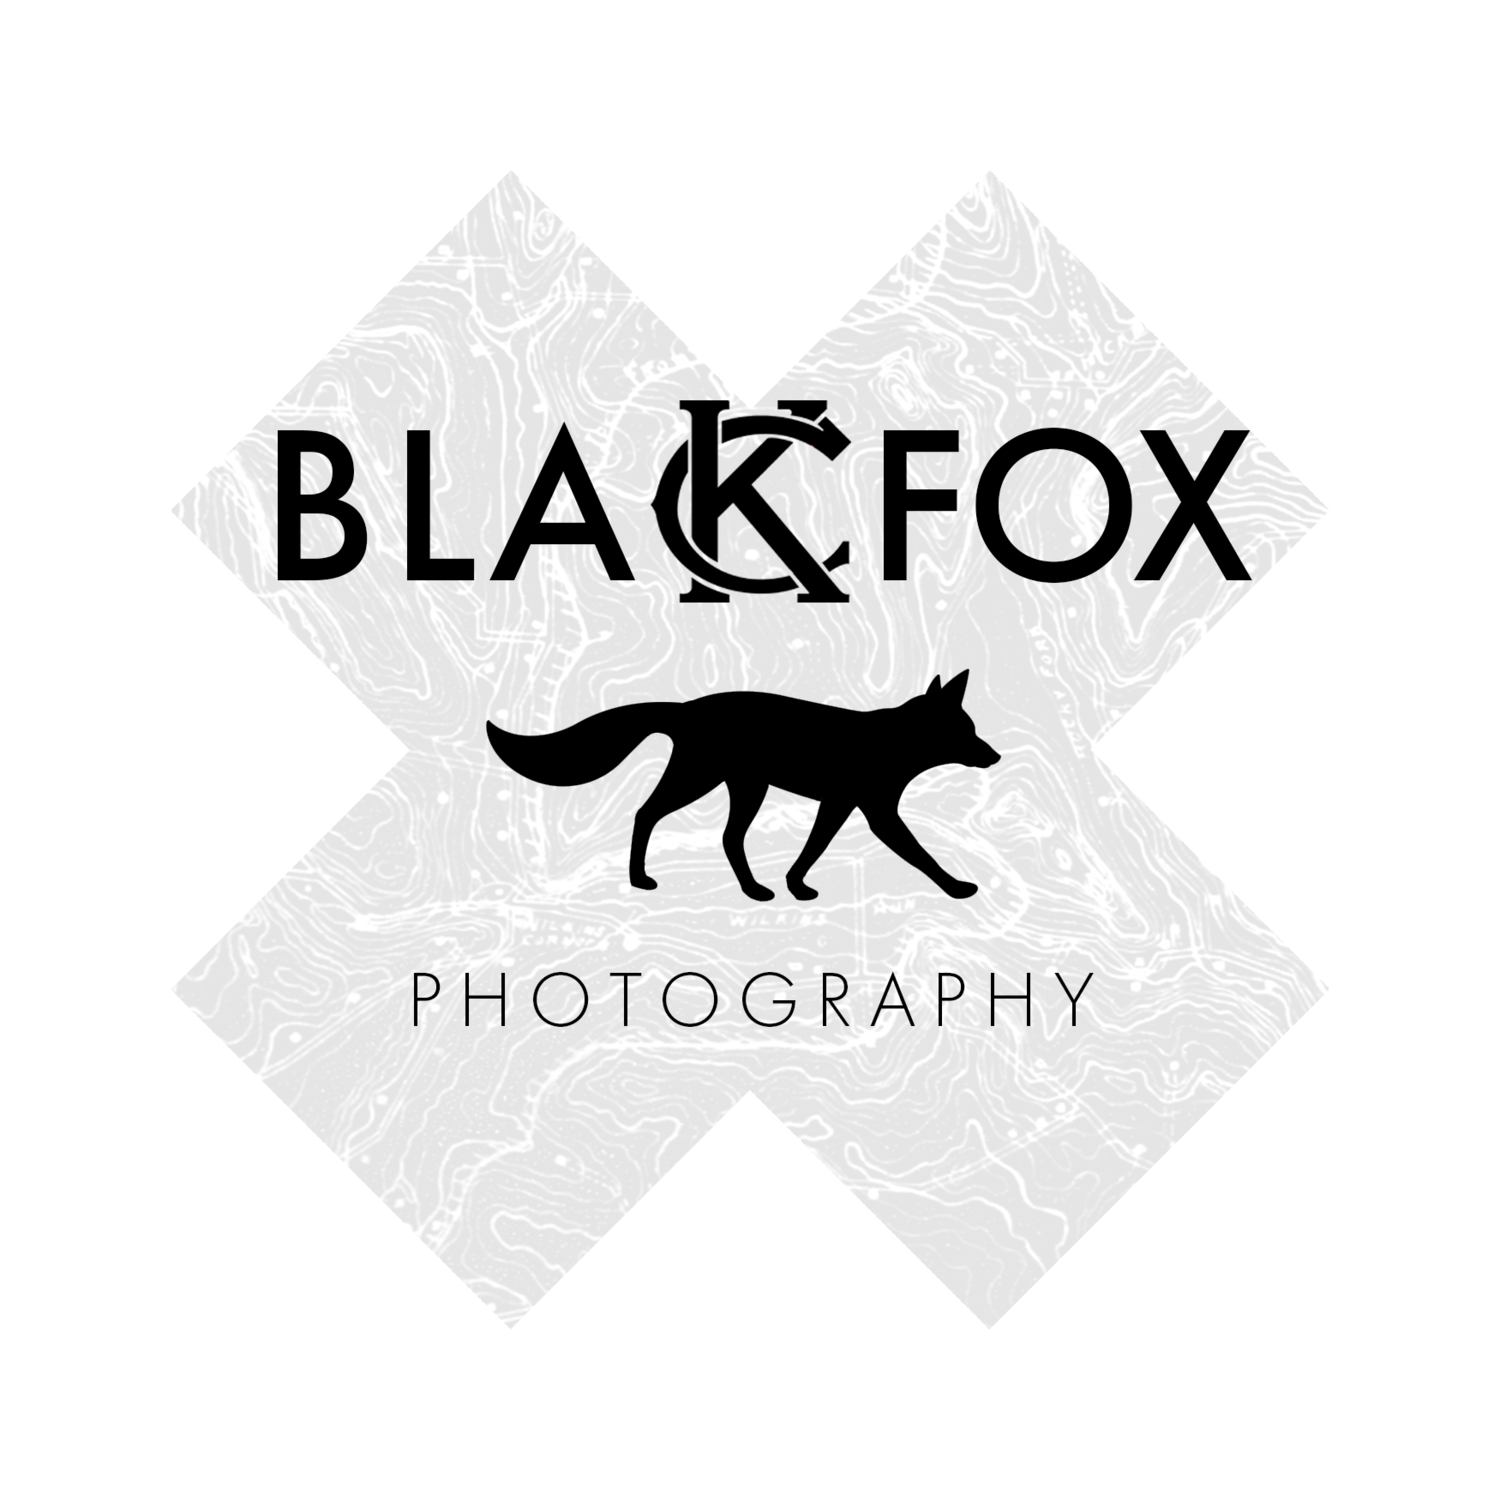 BlackFox Photography